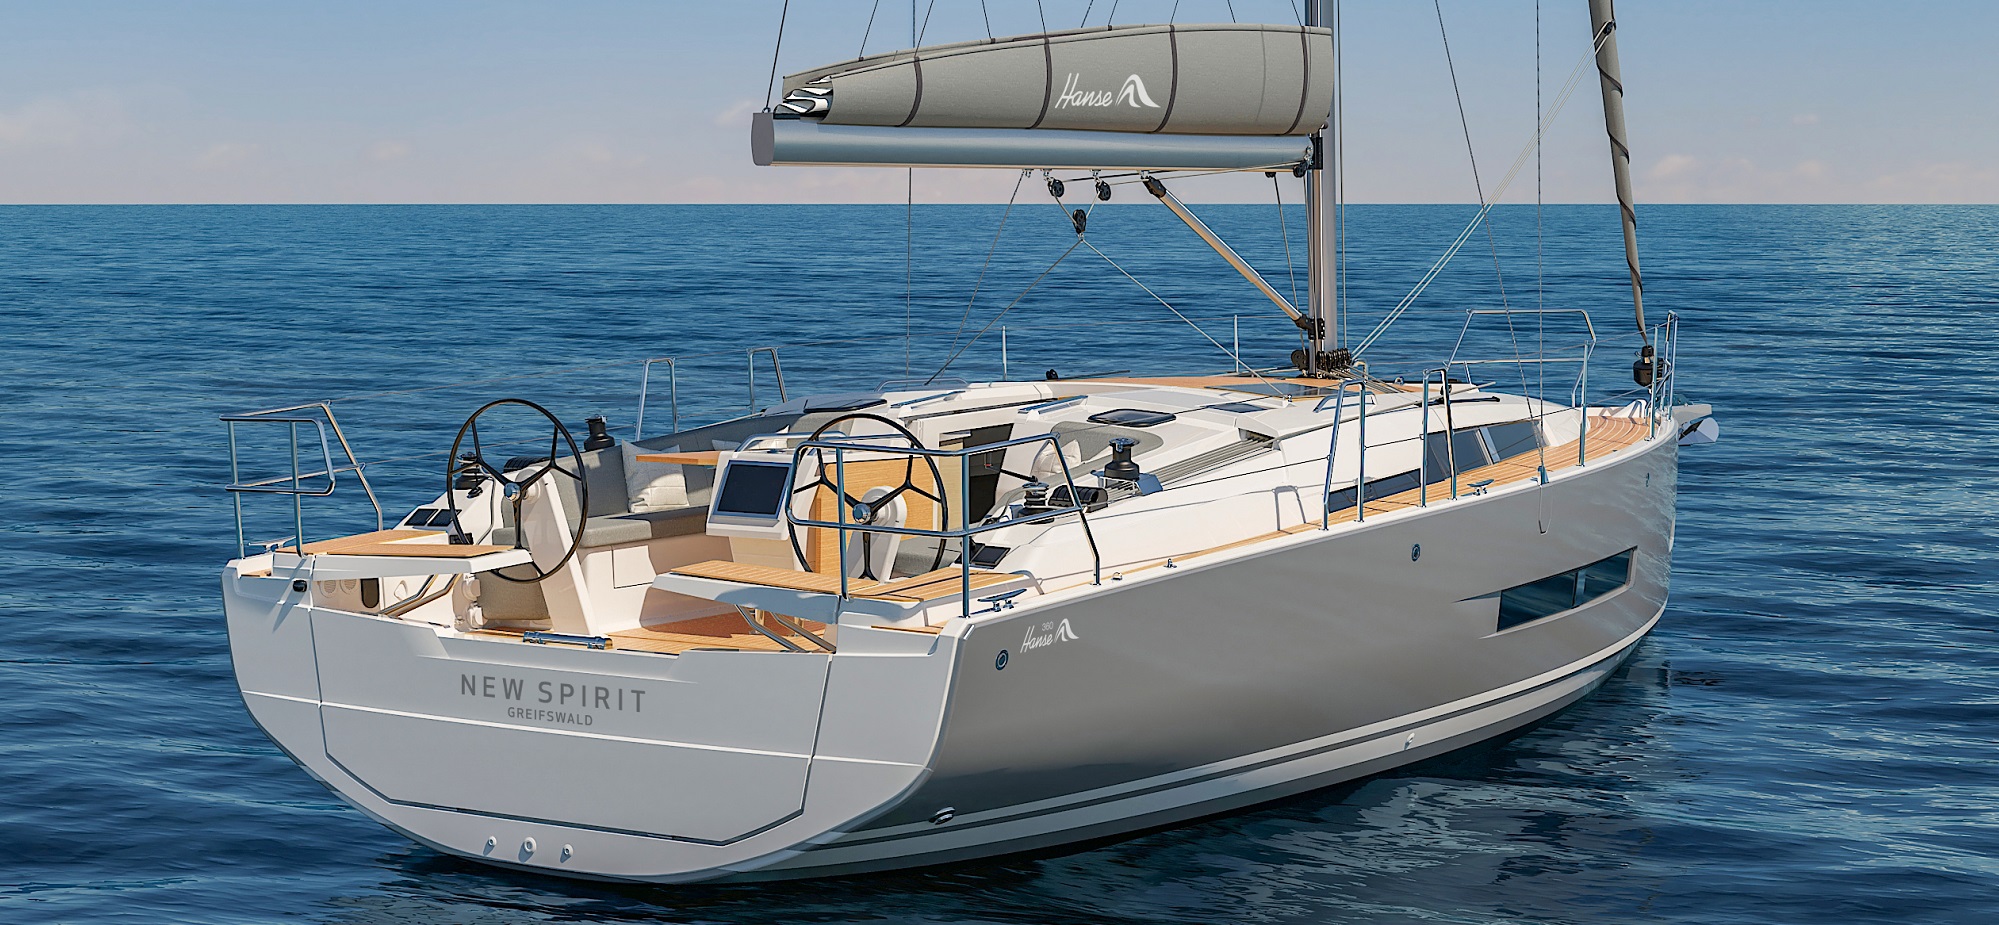 New Hanse 360 - 36 feet of pure comfort and striking design